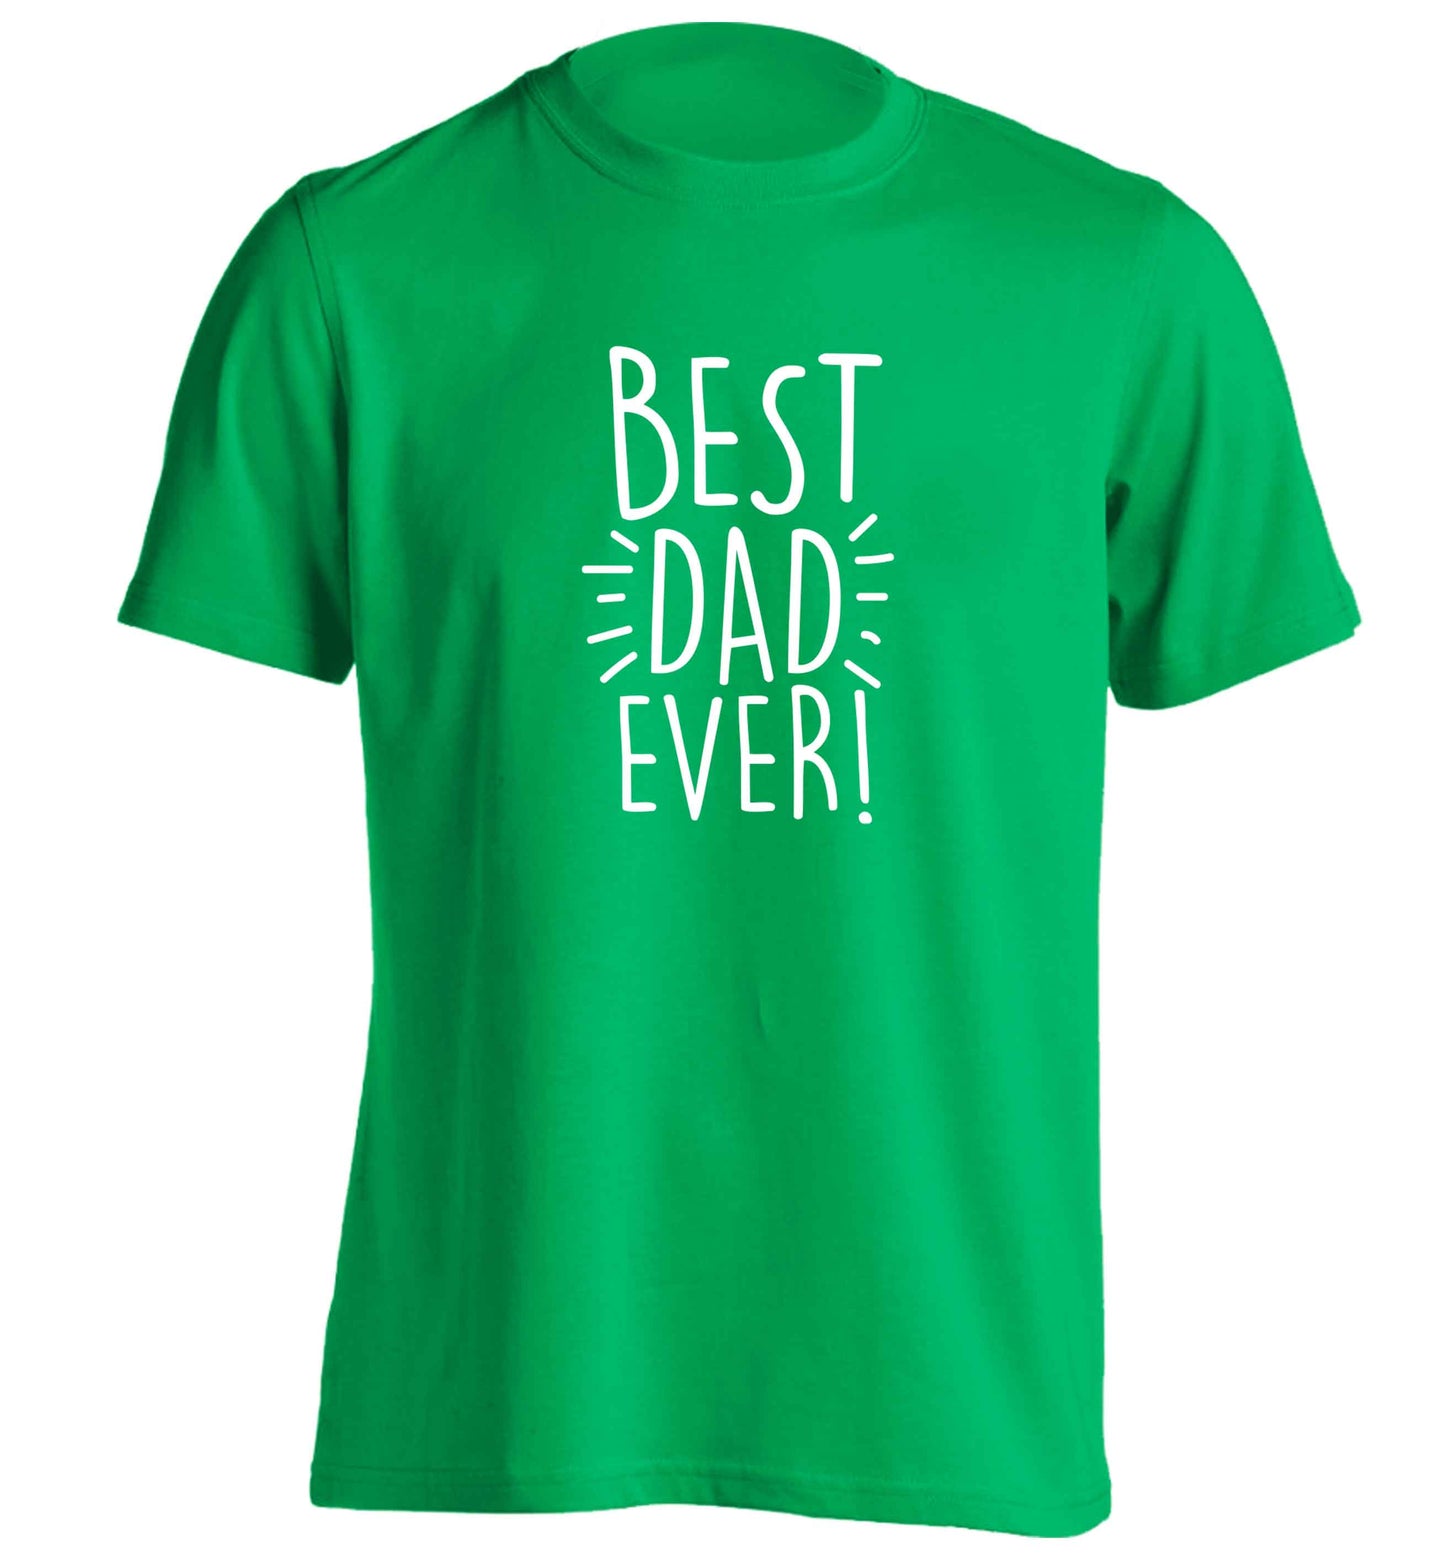 Best dad ever! adults unisex green Tshirt 2XL